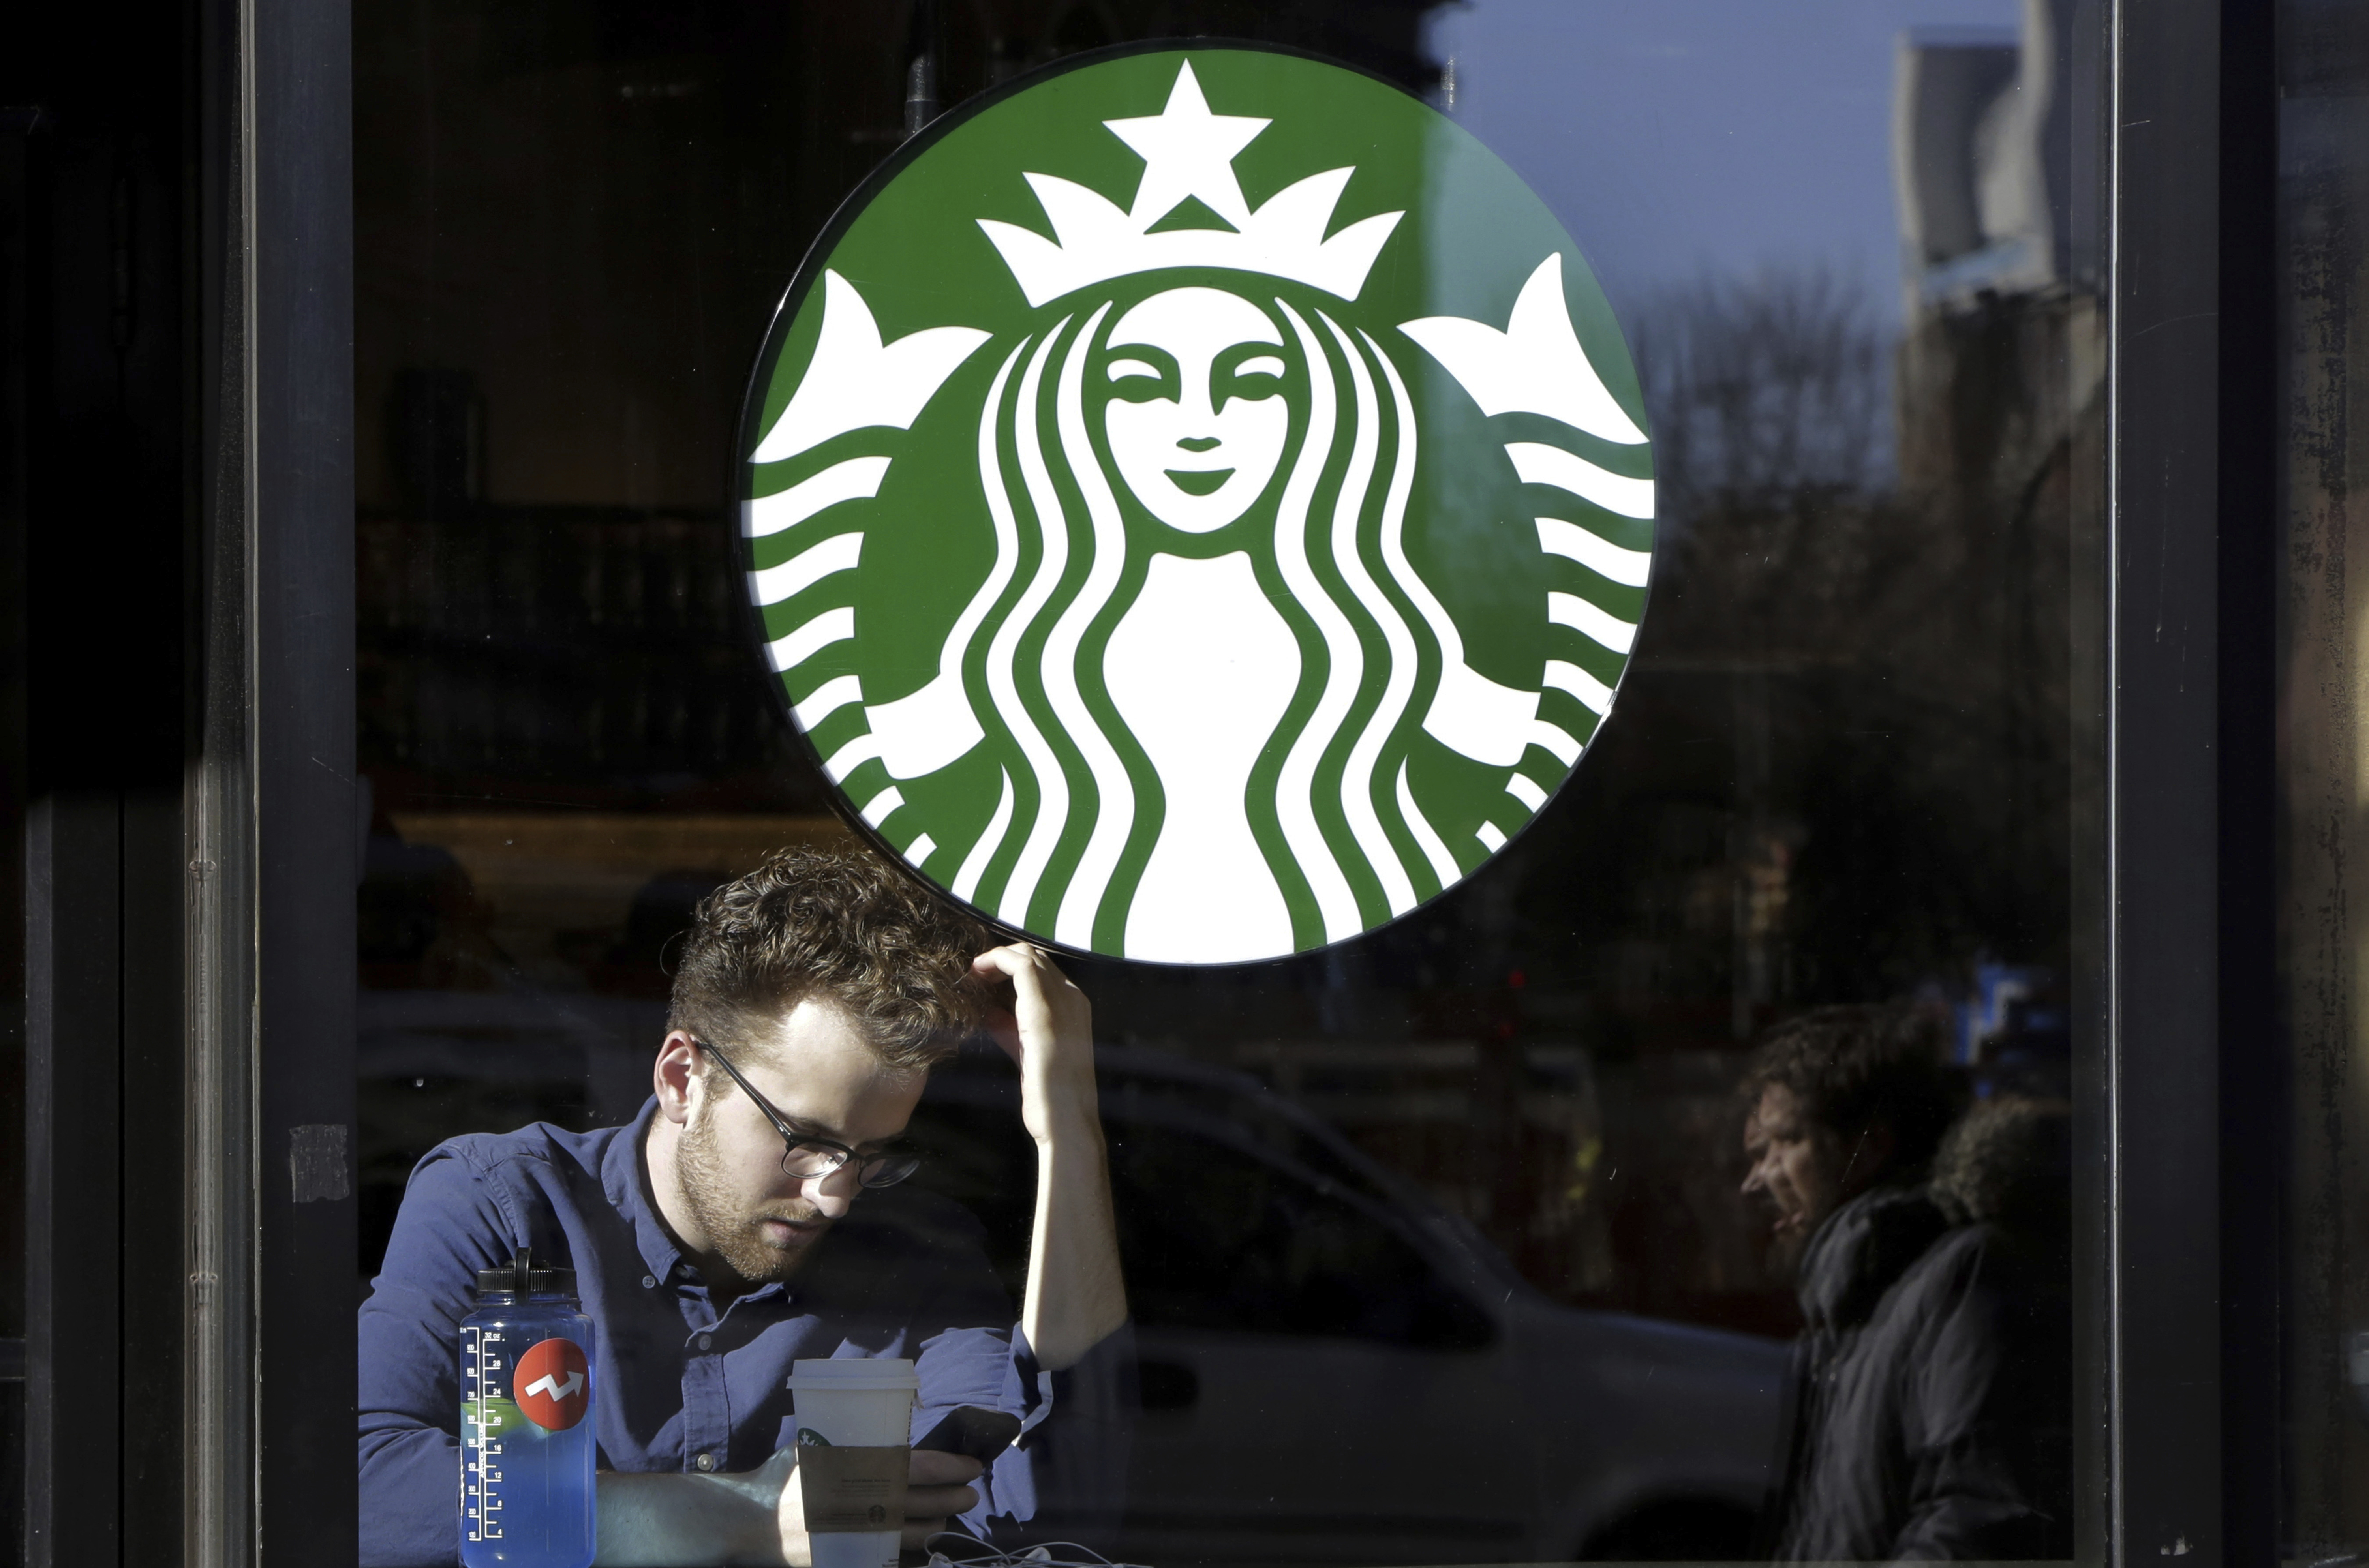 Starbucks Says Over $1 Billion Is Sitting on Gift Cards